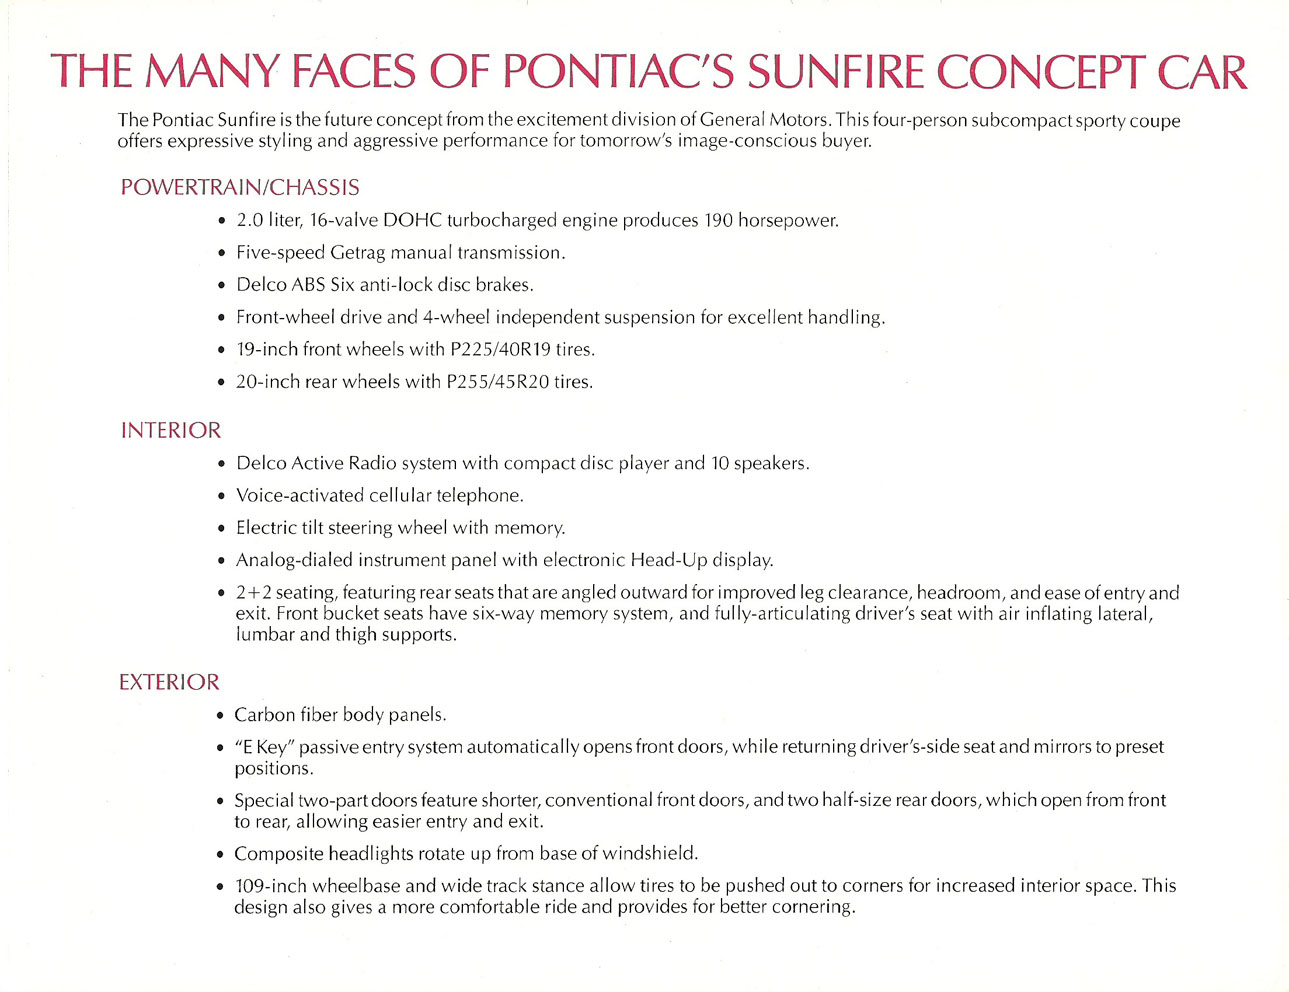 1990_Pontiac_Sunfire_Concept_Folder-02